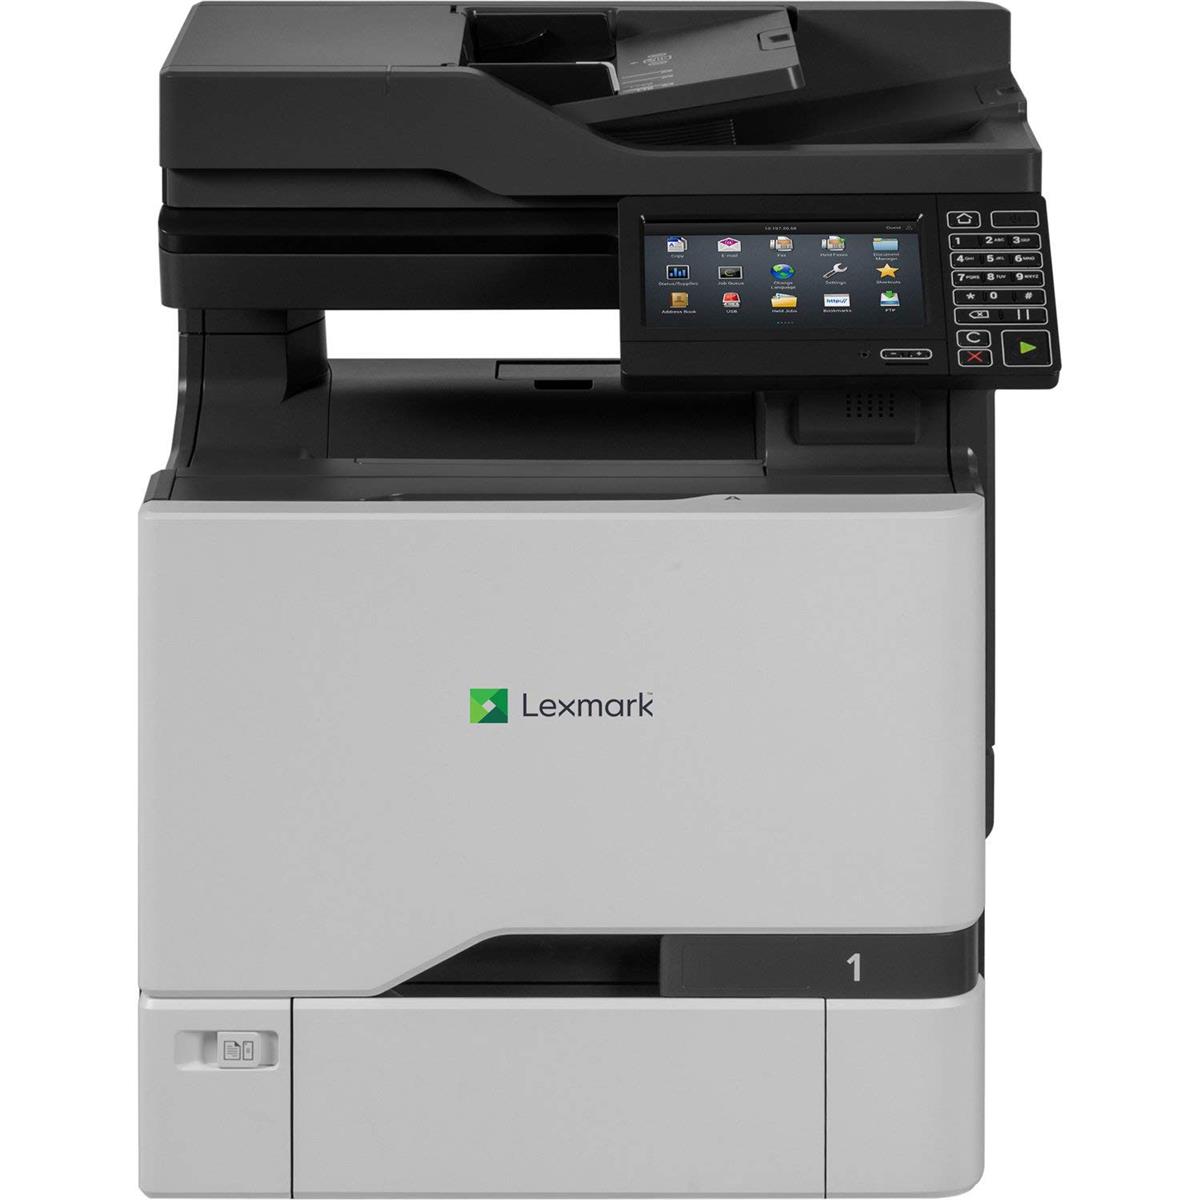 Image of Lexmark CX725de Color Laser Multifunction Printer